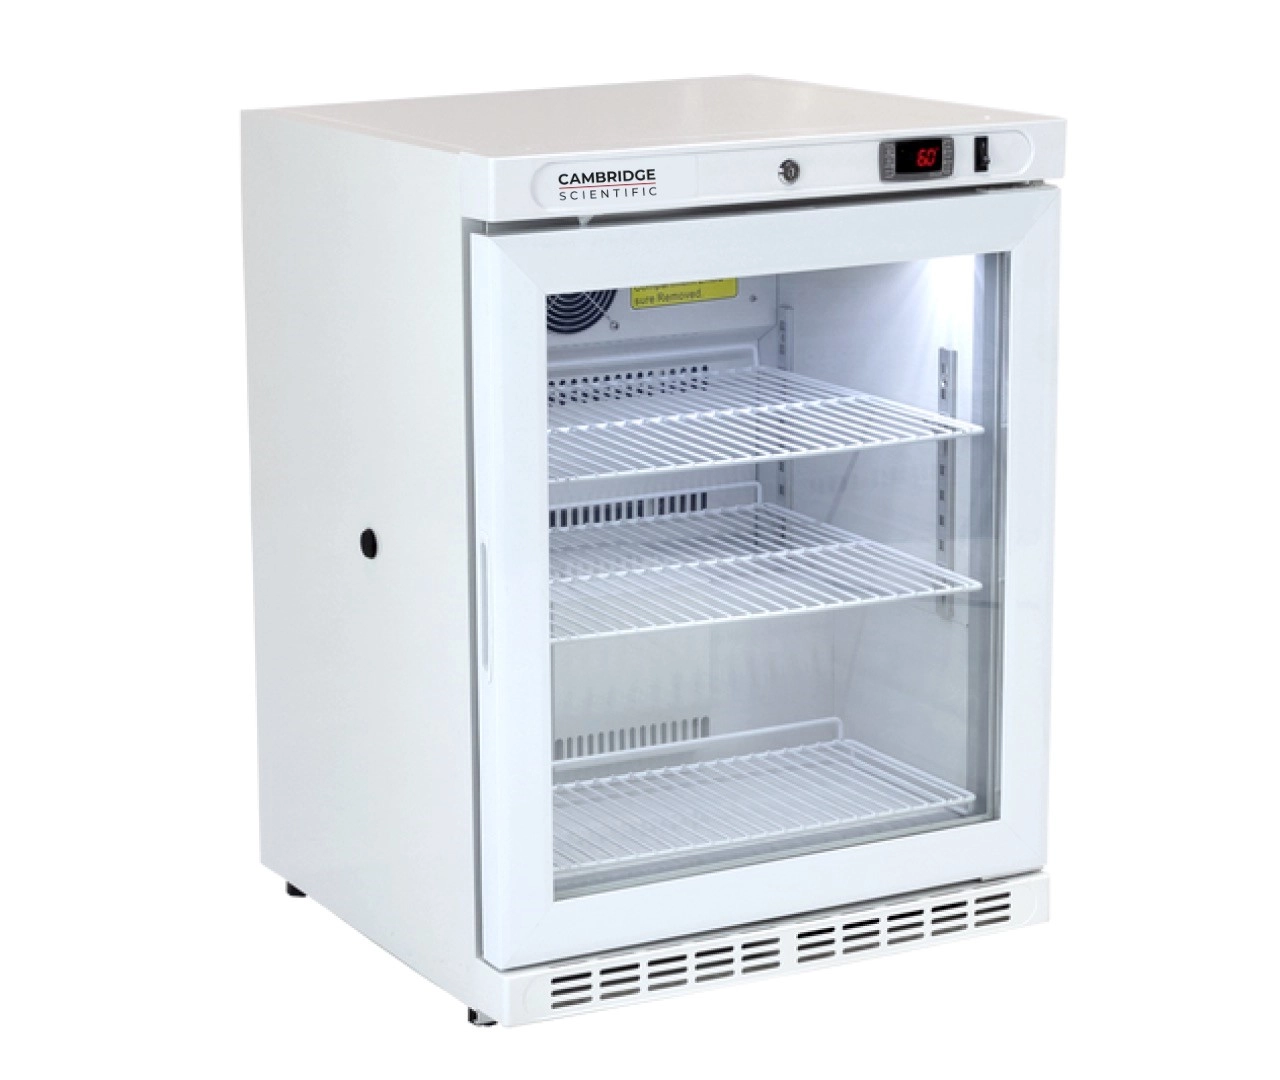 Cambridge Scientific K204GDR *NEW* Undercounter Refrigerator